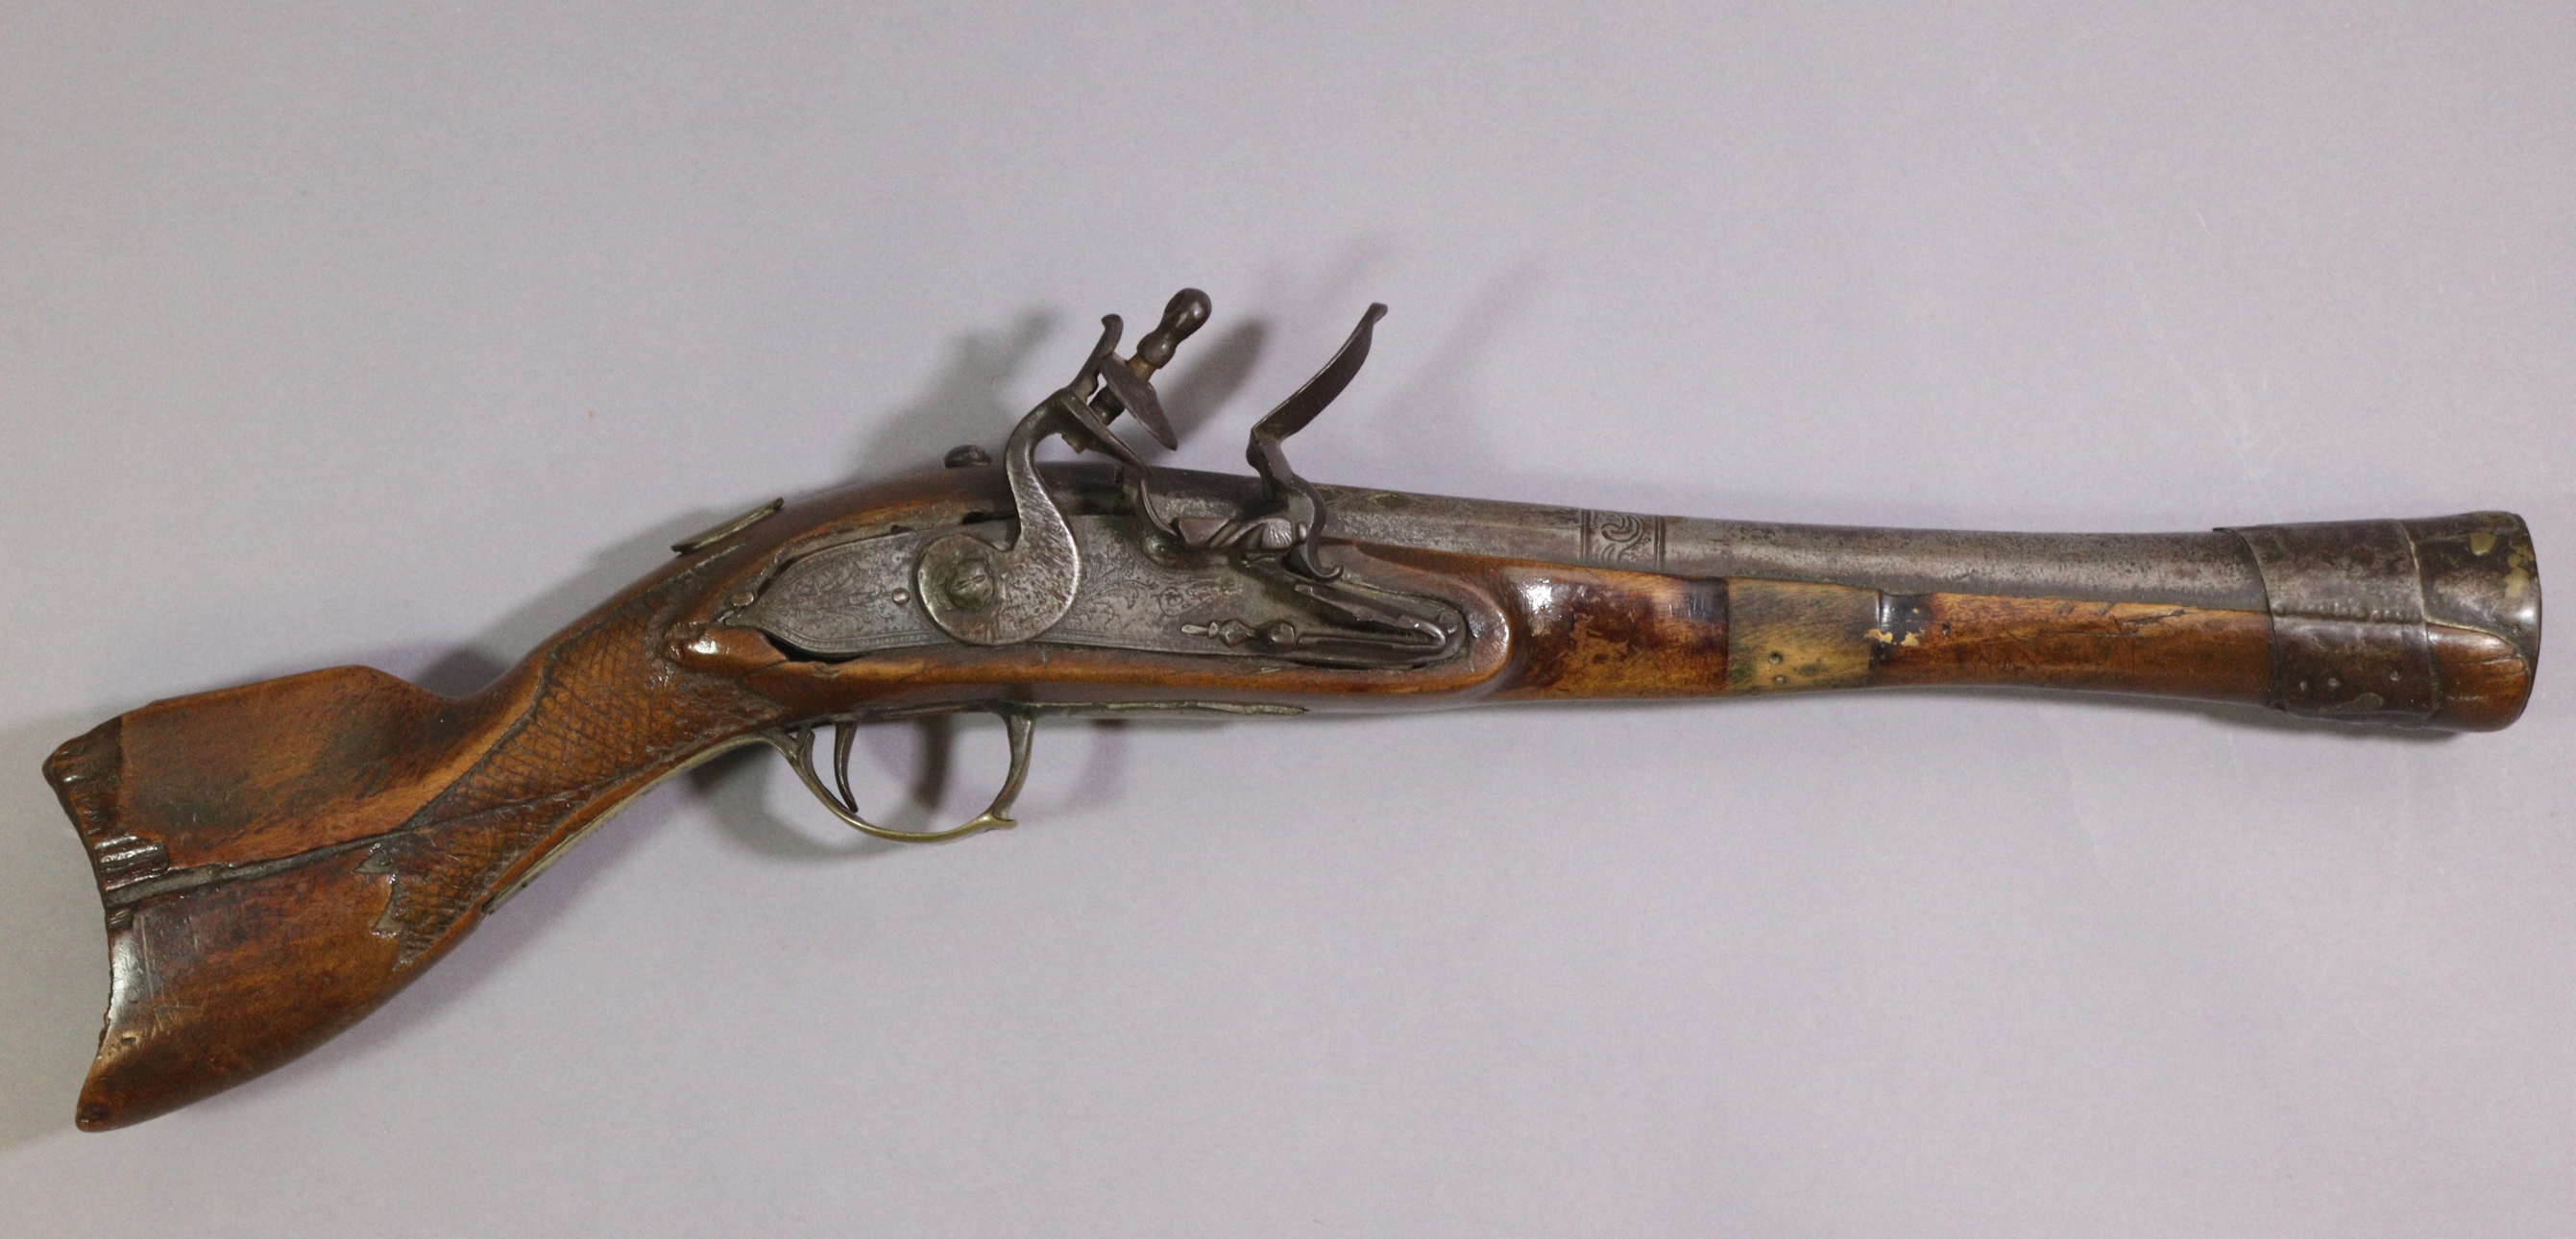 A 19th century Ottoman blunderbuss 'knee' pistol, 19" long.